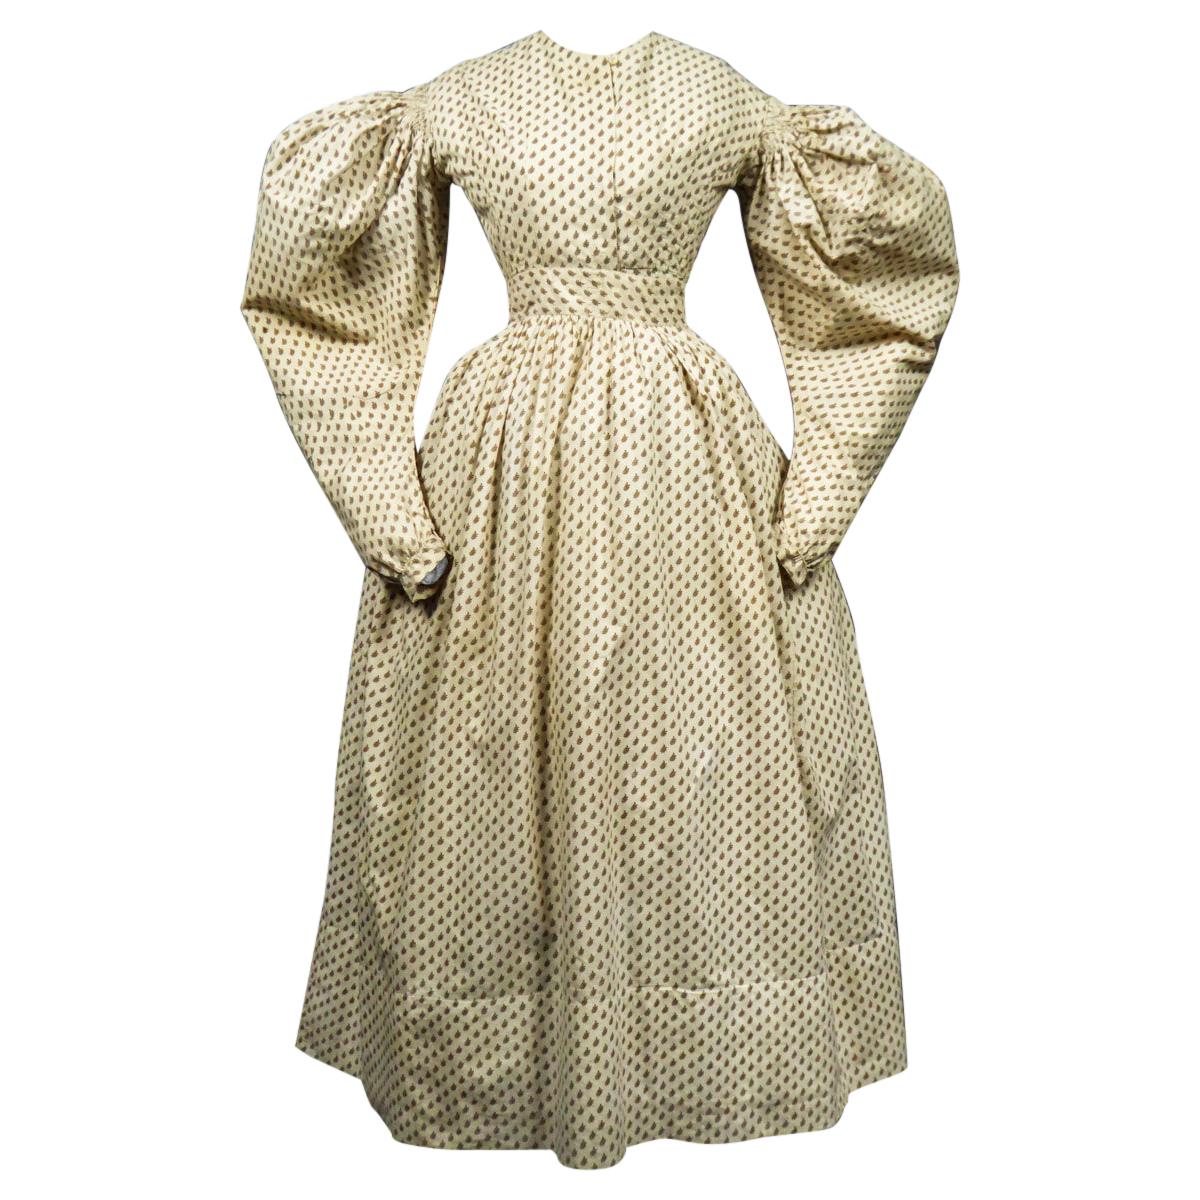 A French Romantic Era Printed Cotton Day Dress Circa 1830